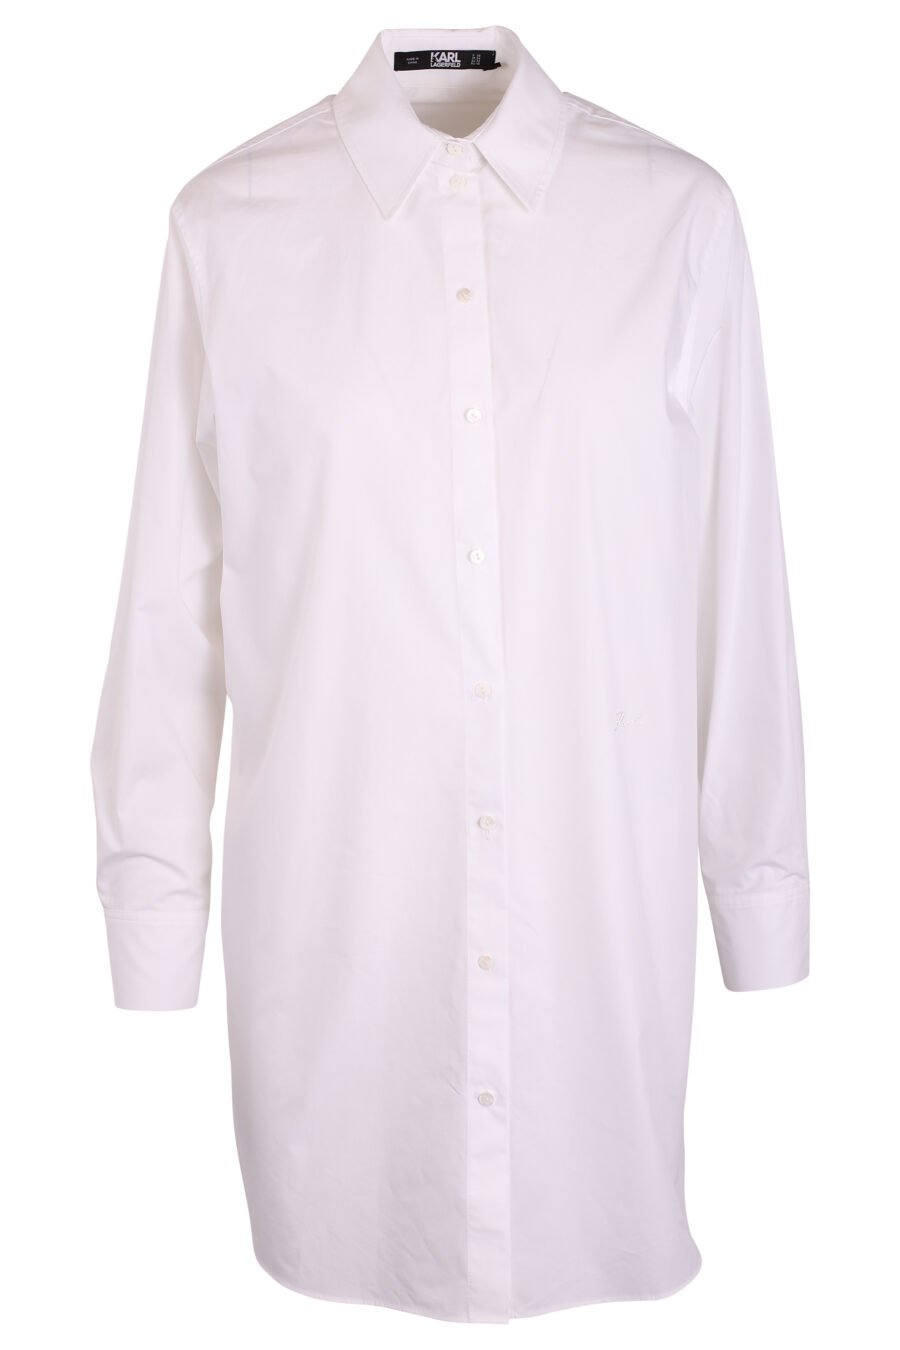 Camisa branca comprida com logótipo de strass - IMG 3422